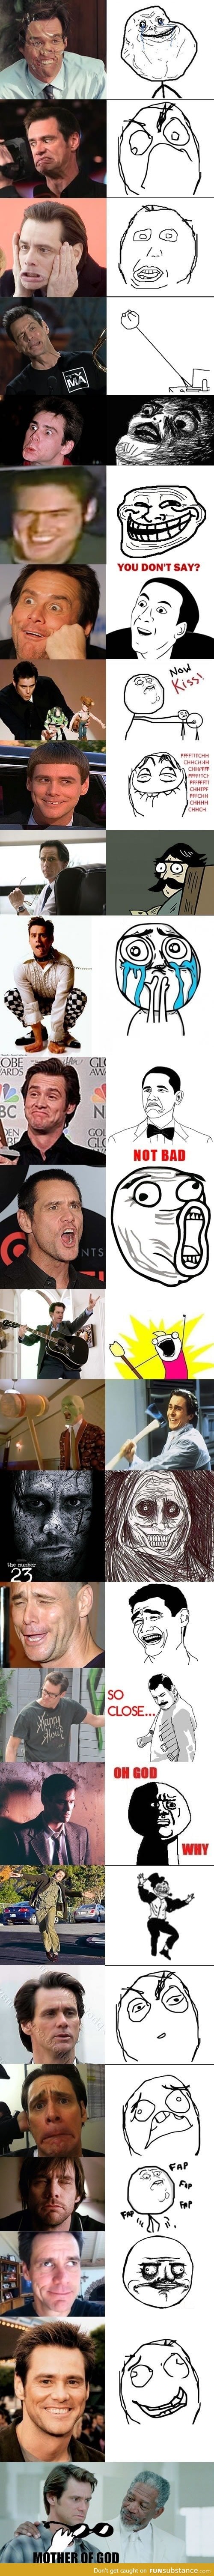 Jim Carrey & Rage Faces